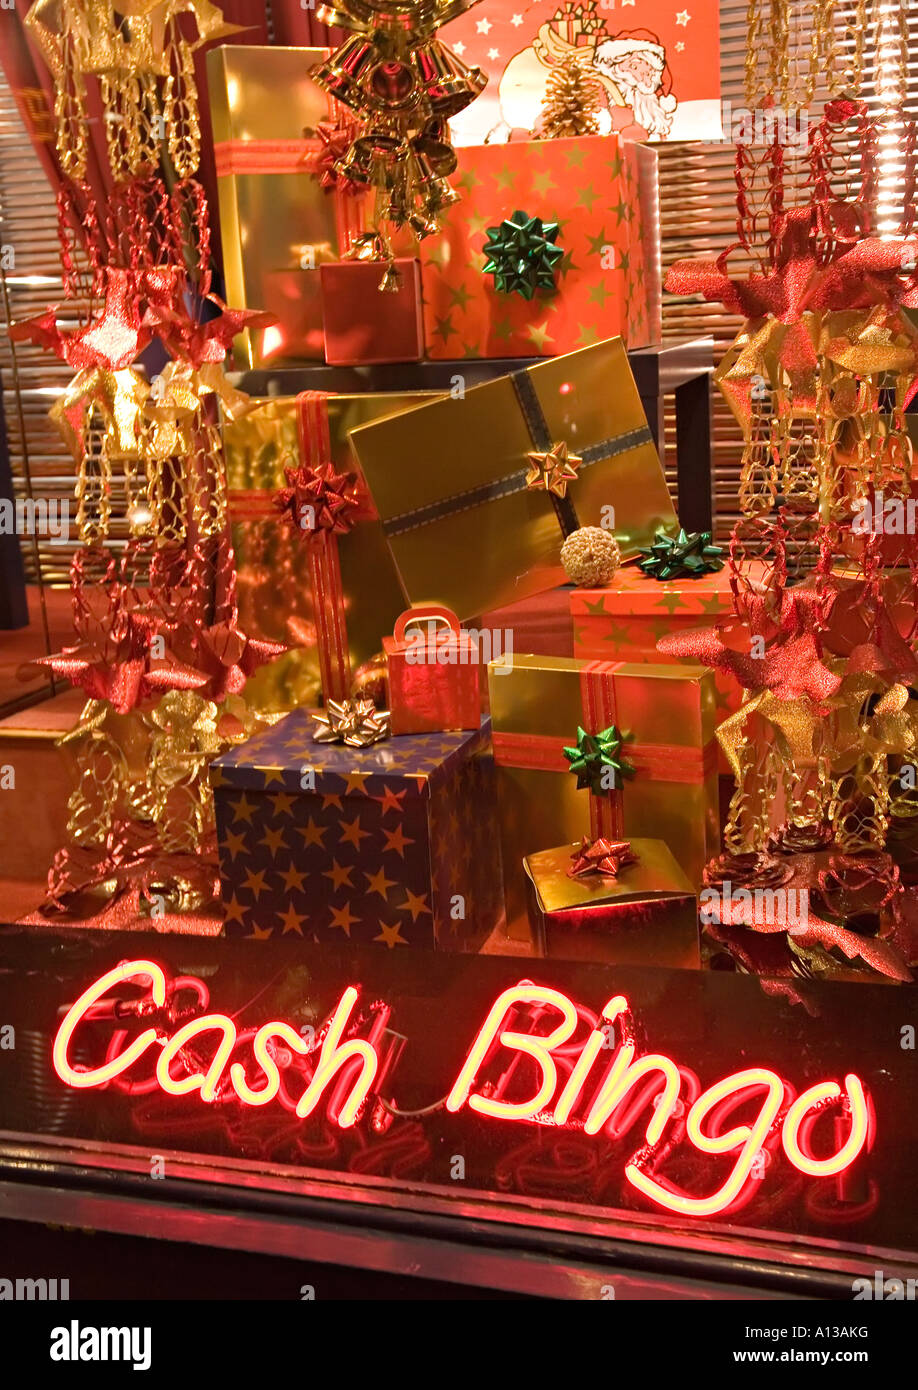 Cash Bingo sign lights with prize display Cardiff Wales UK Stock Photo